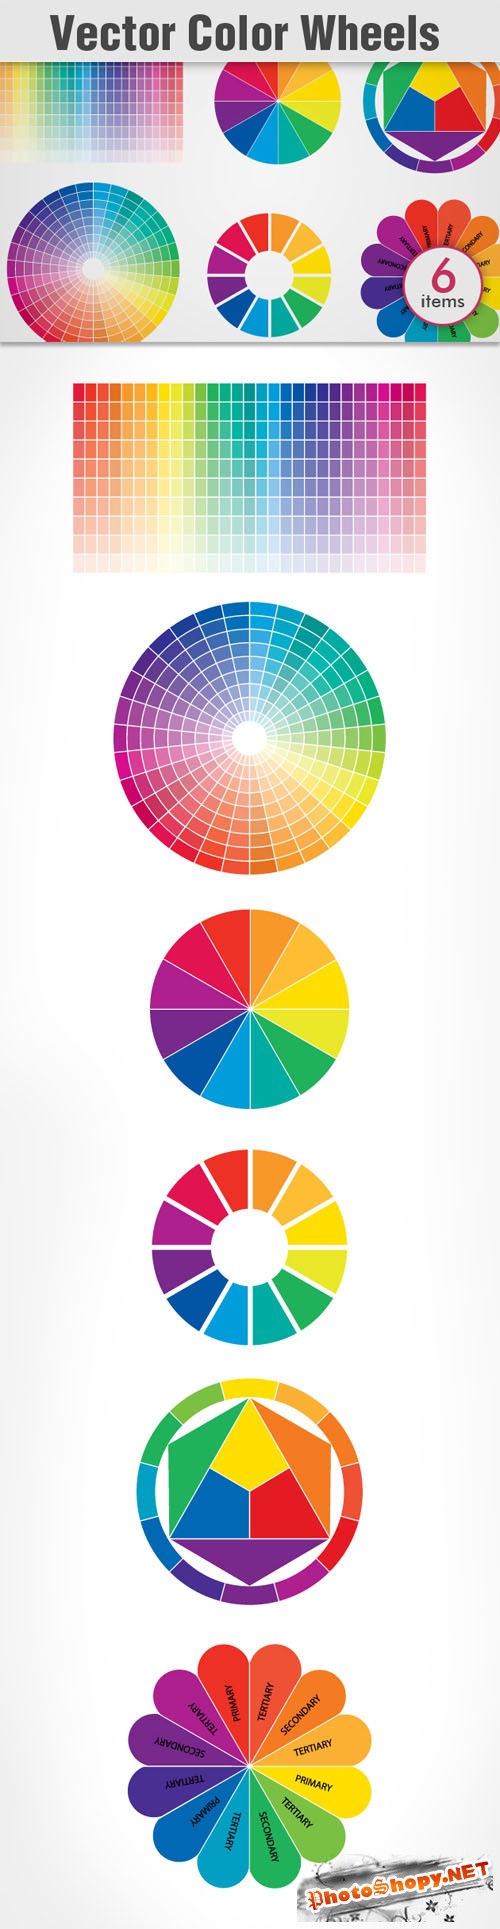 Designtnt - Color Wheel Vector Set